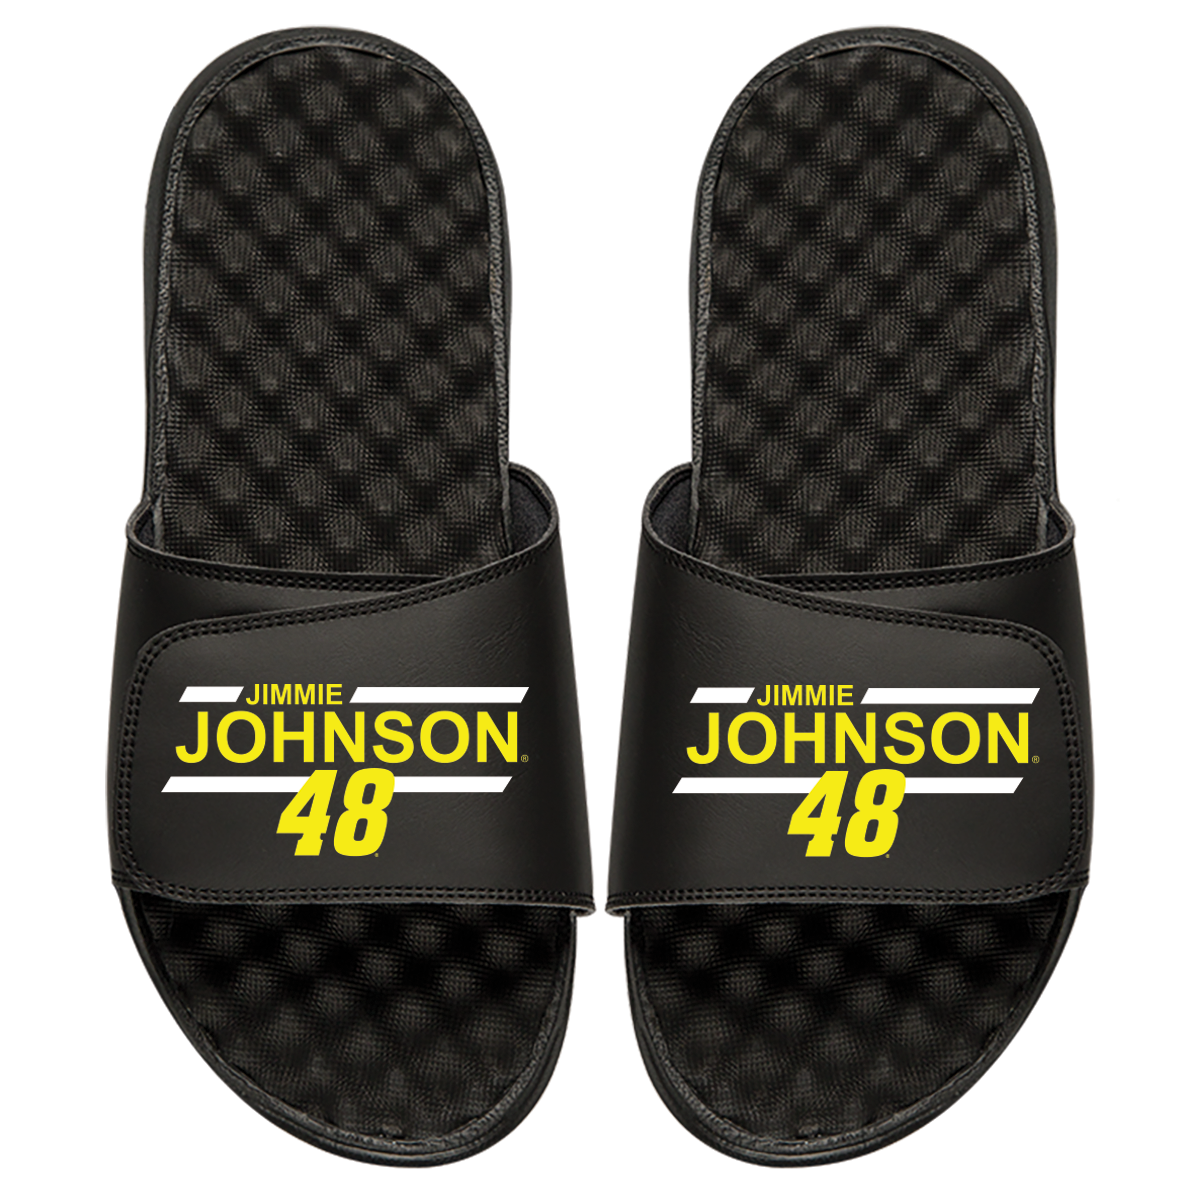 Jimmie Johnson 48 Bar Logo Slides